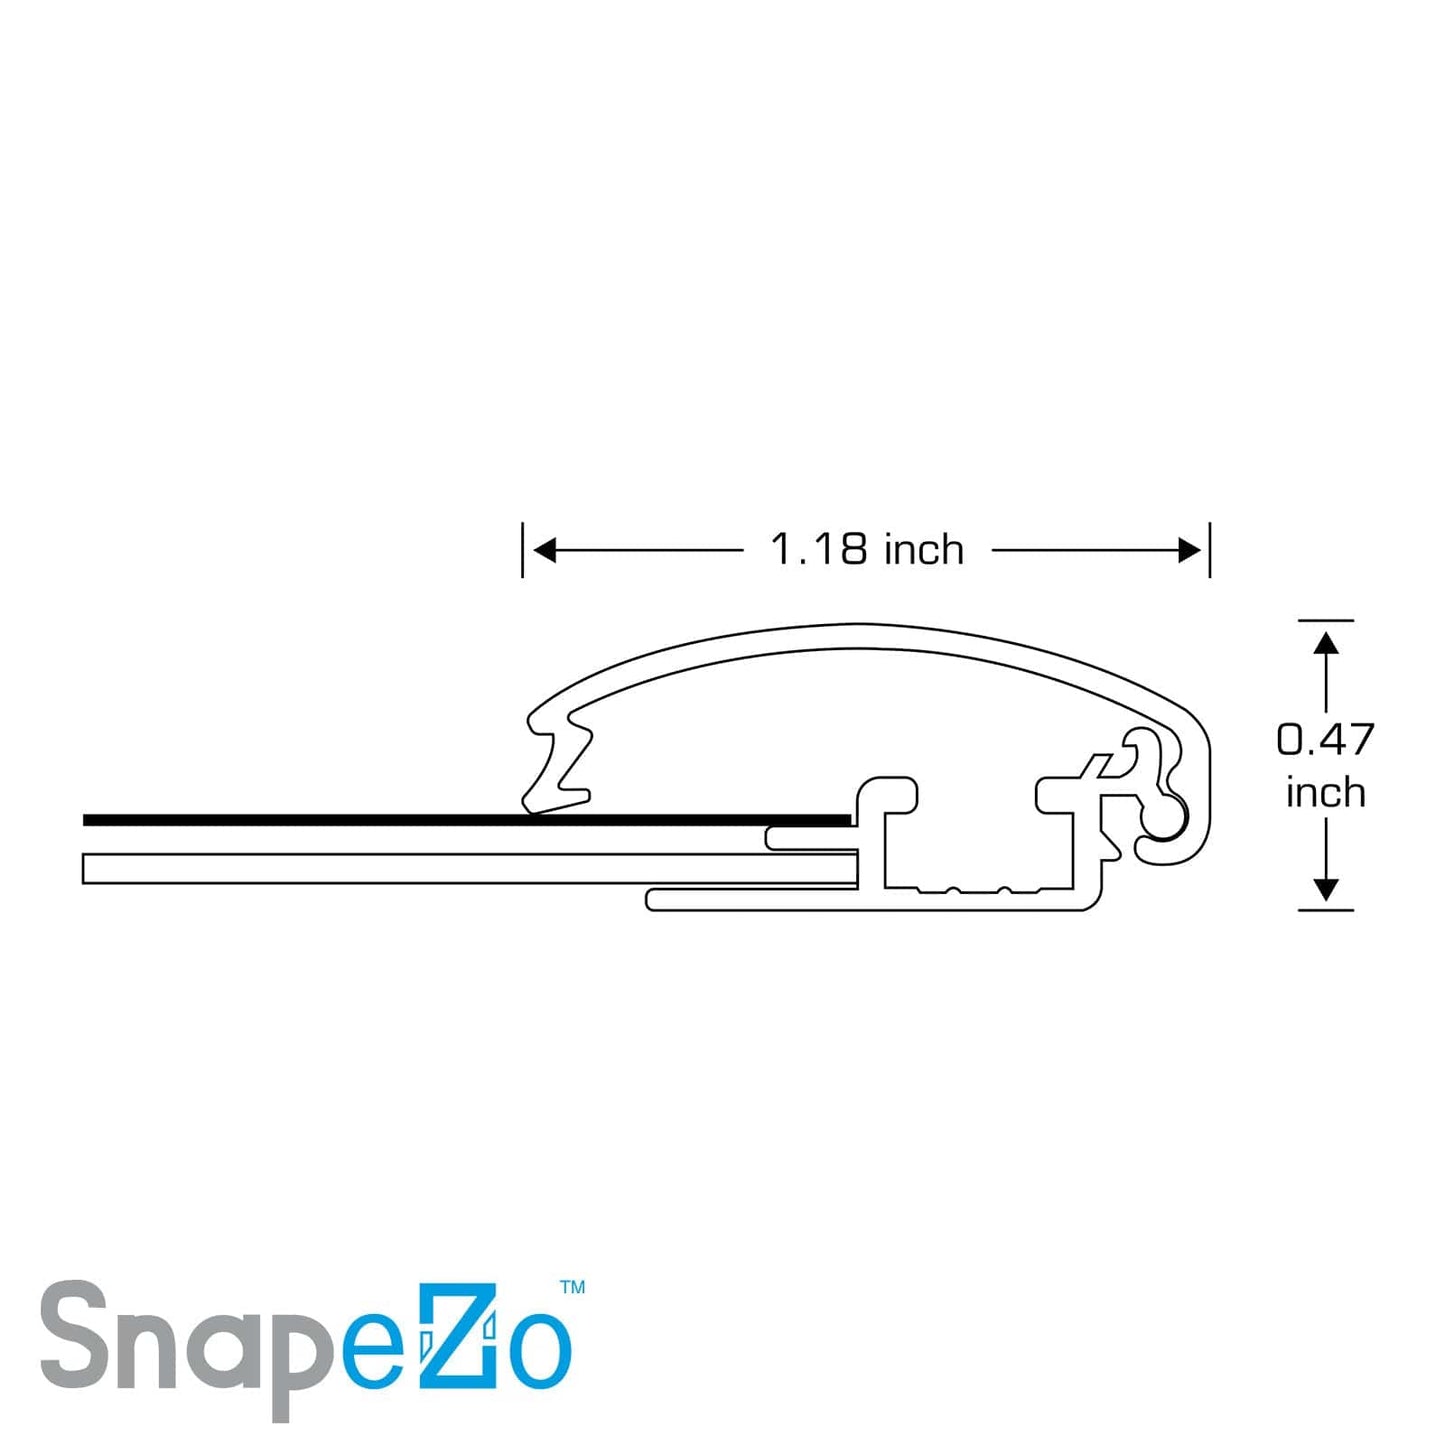 13x22 White SnapeZo® Snap Frame - 1.2" Profile - Snap Frames Direct